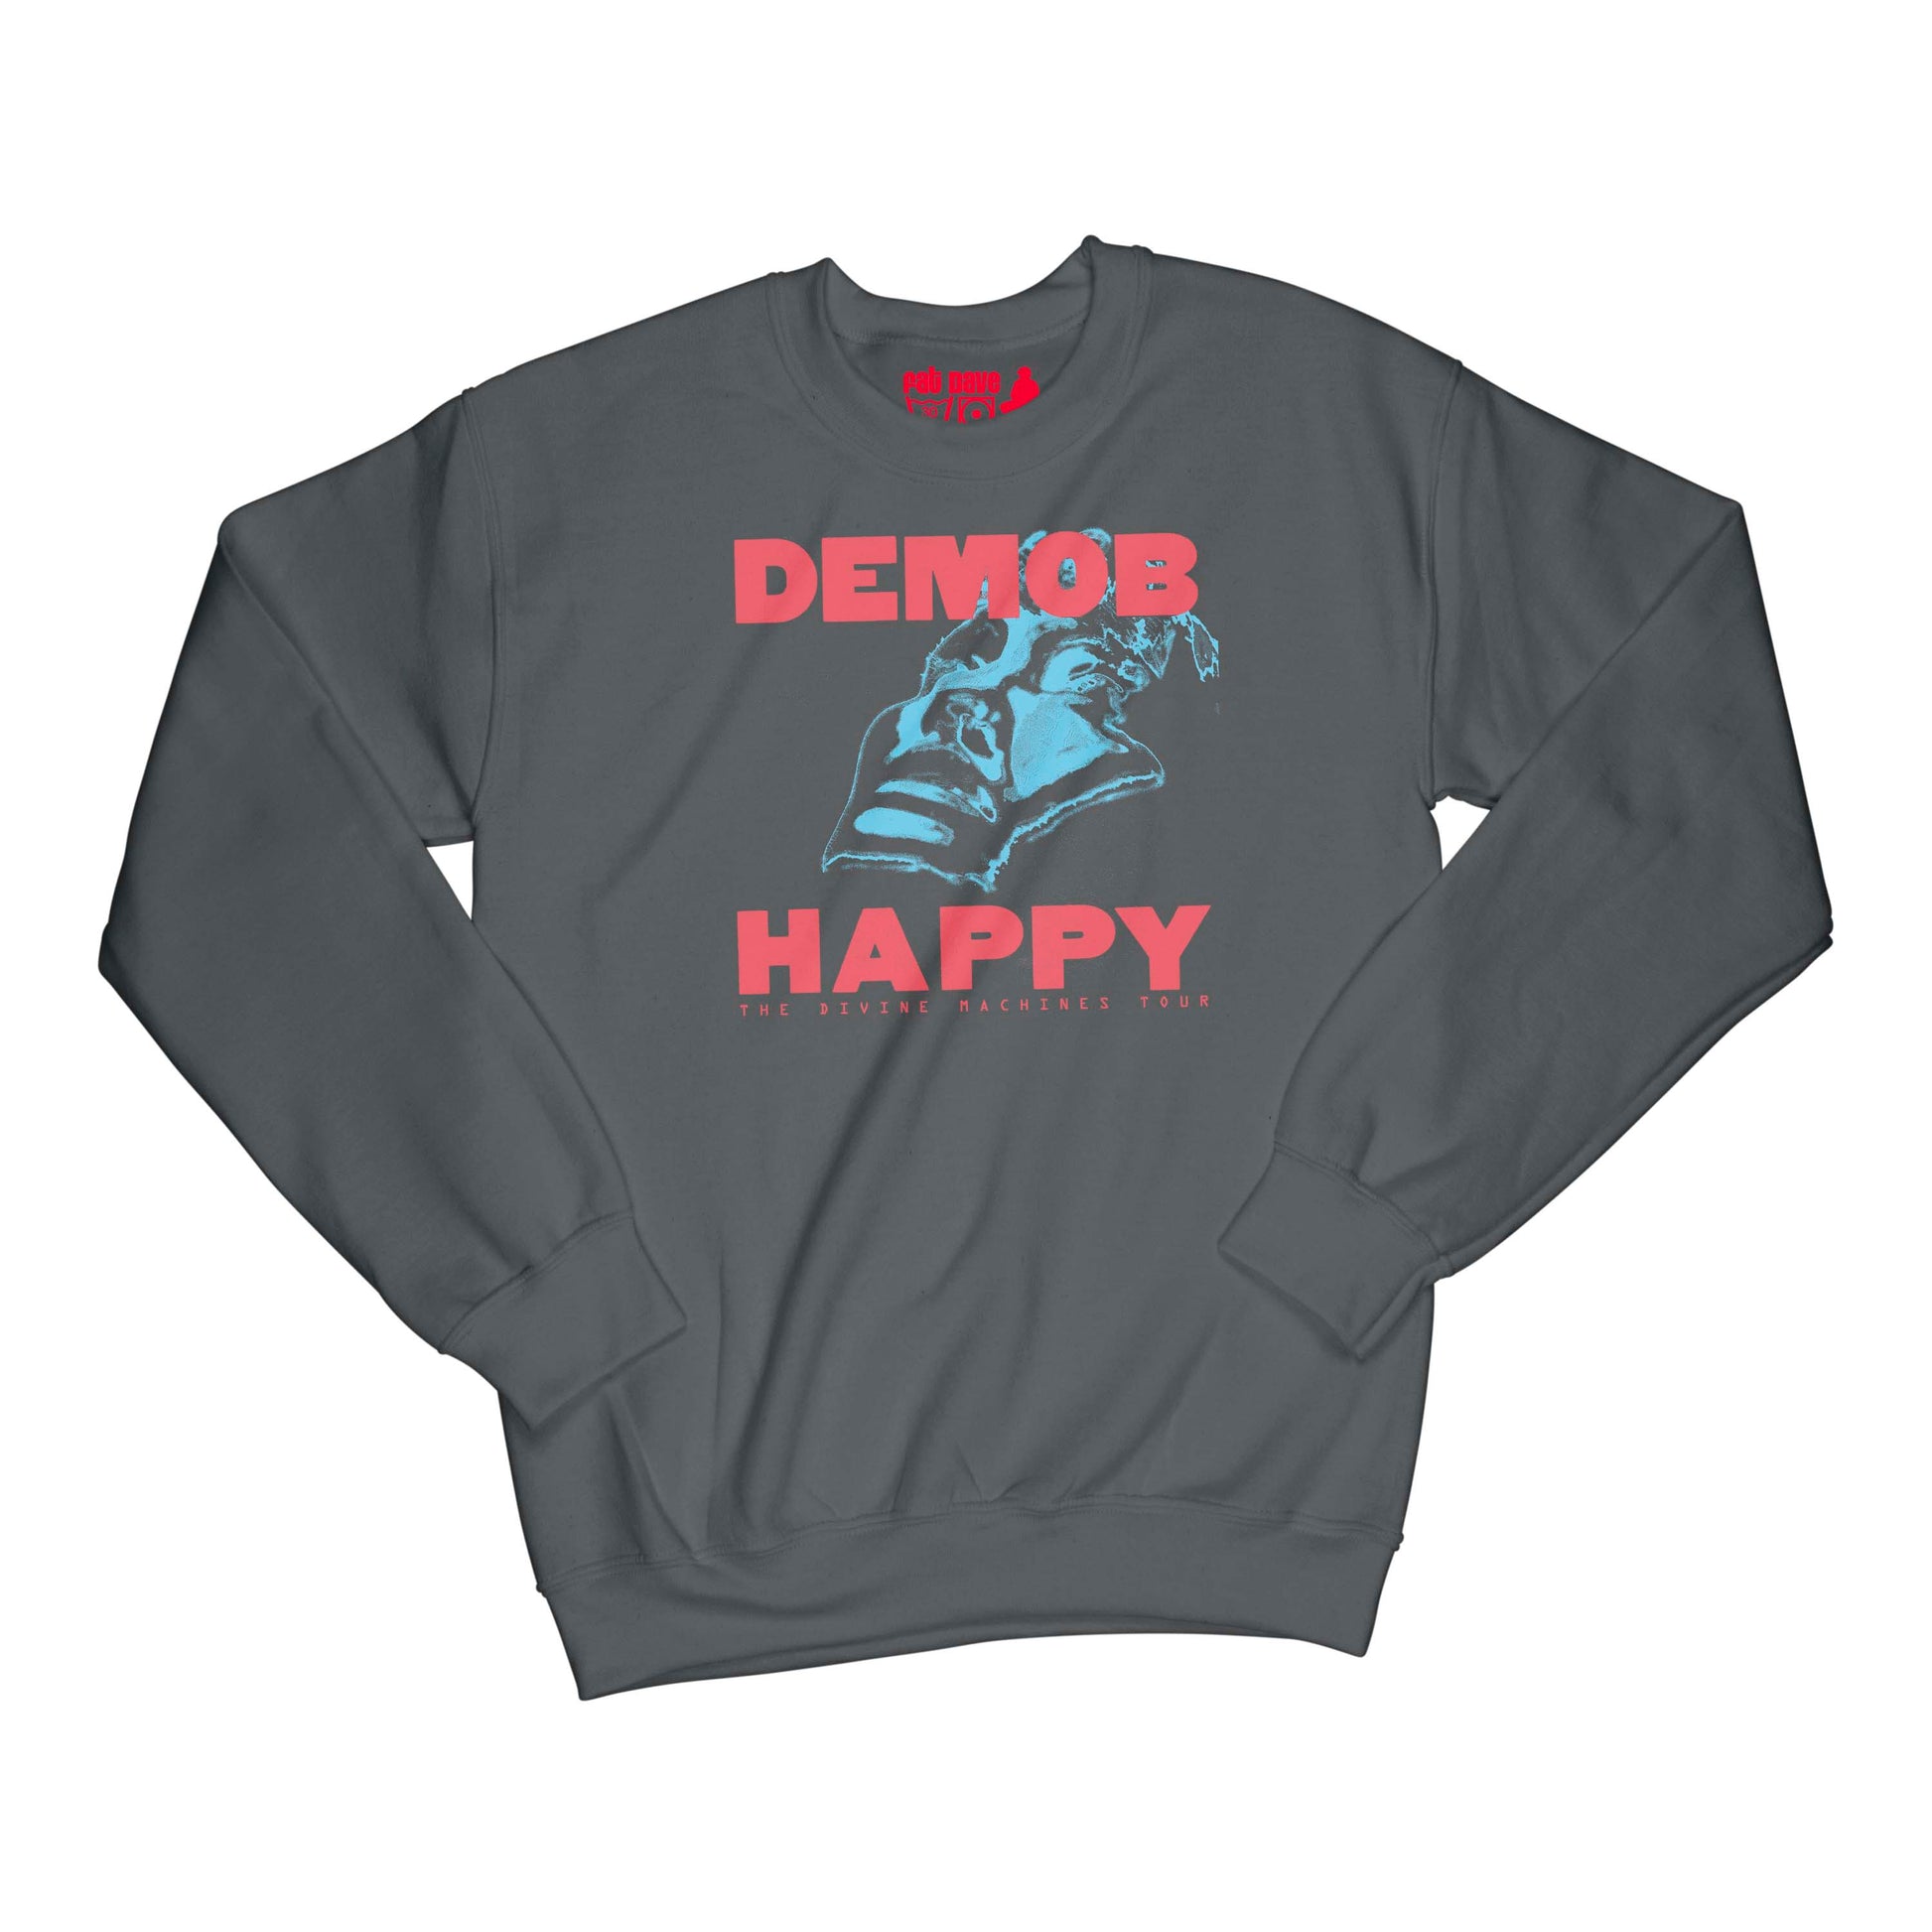 Demob Happy The Devine Machines Tour Sweatshirt Small Black